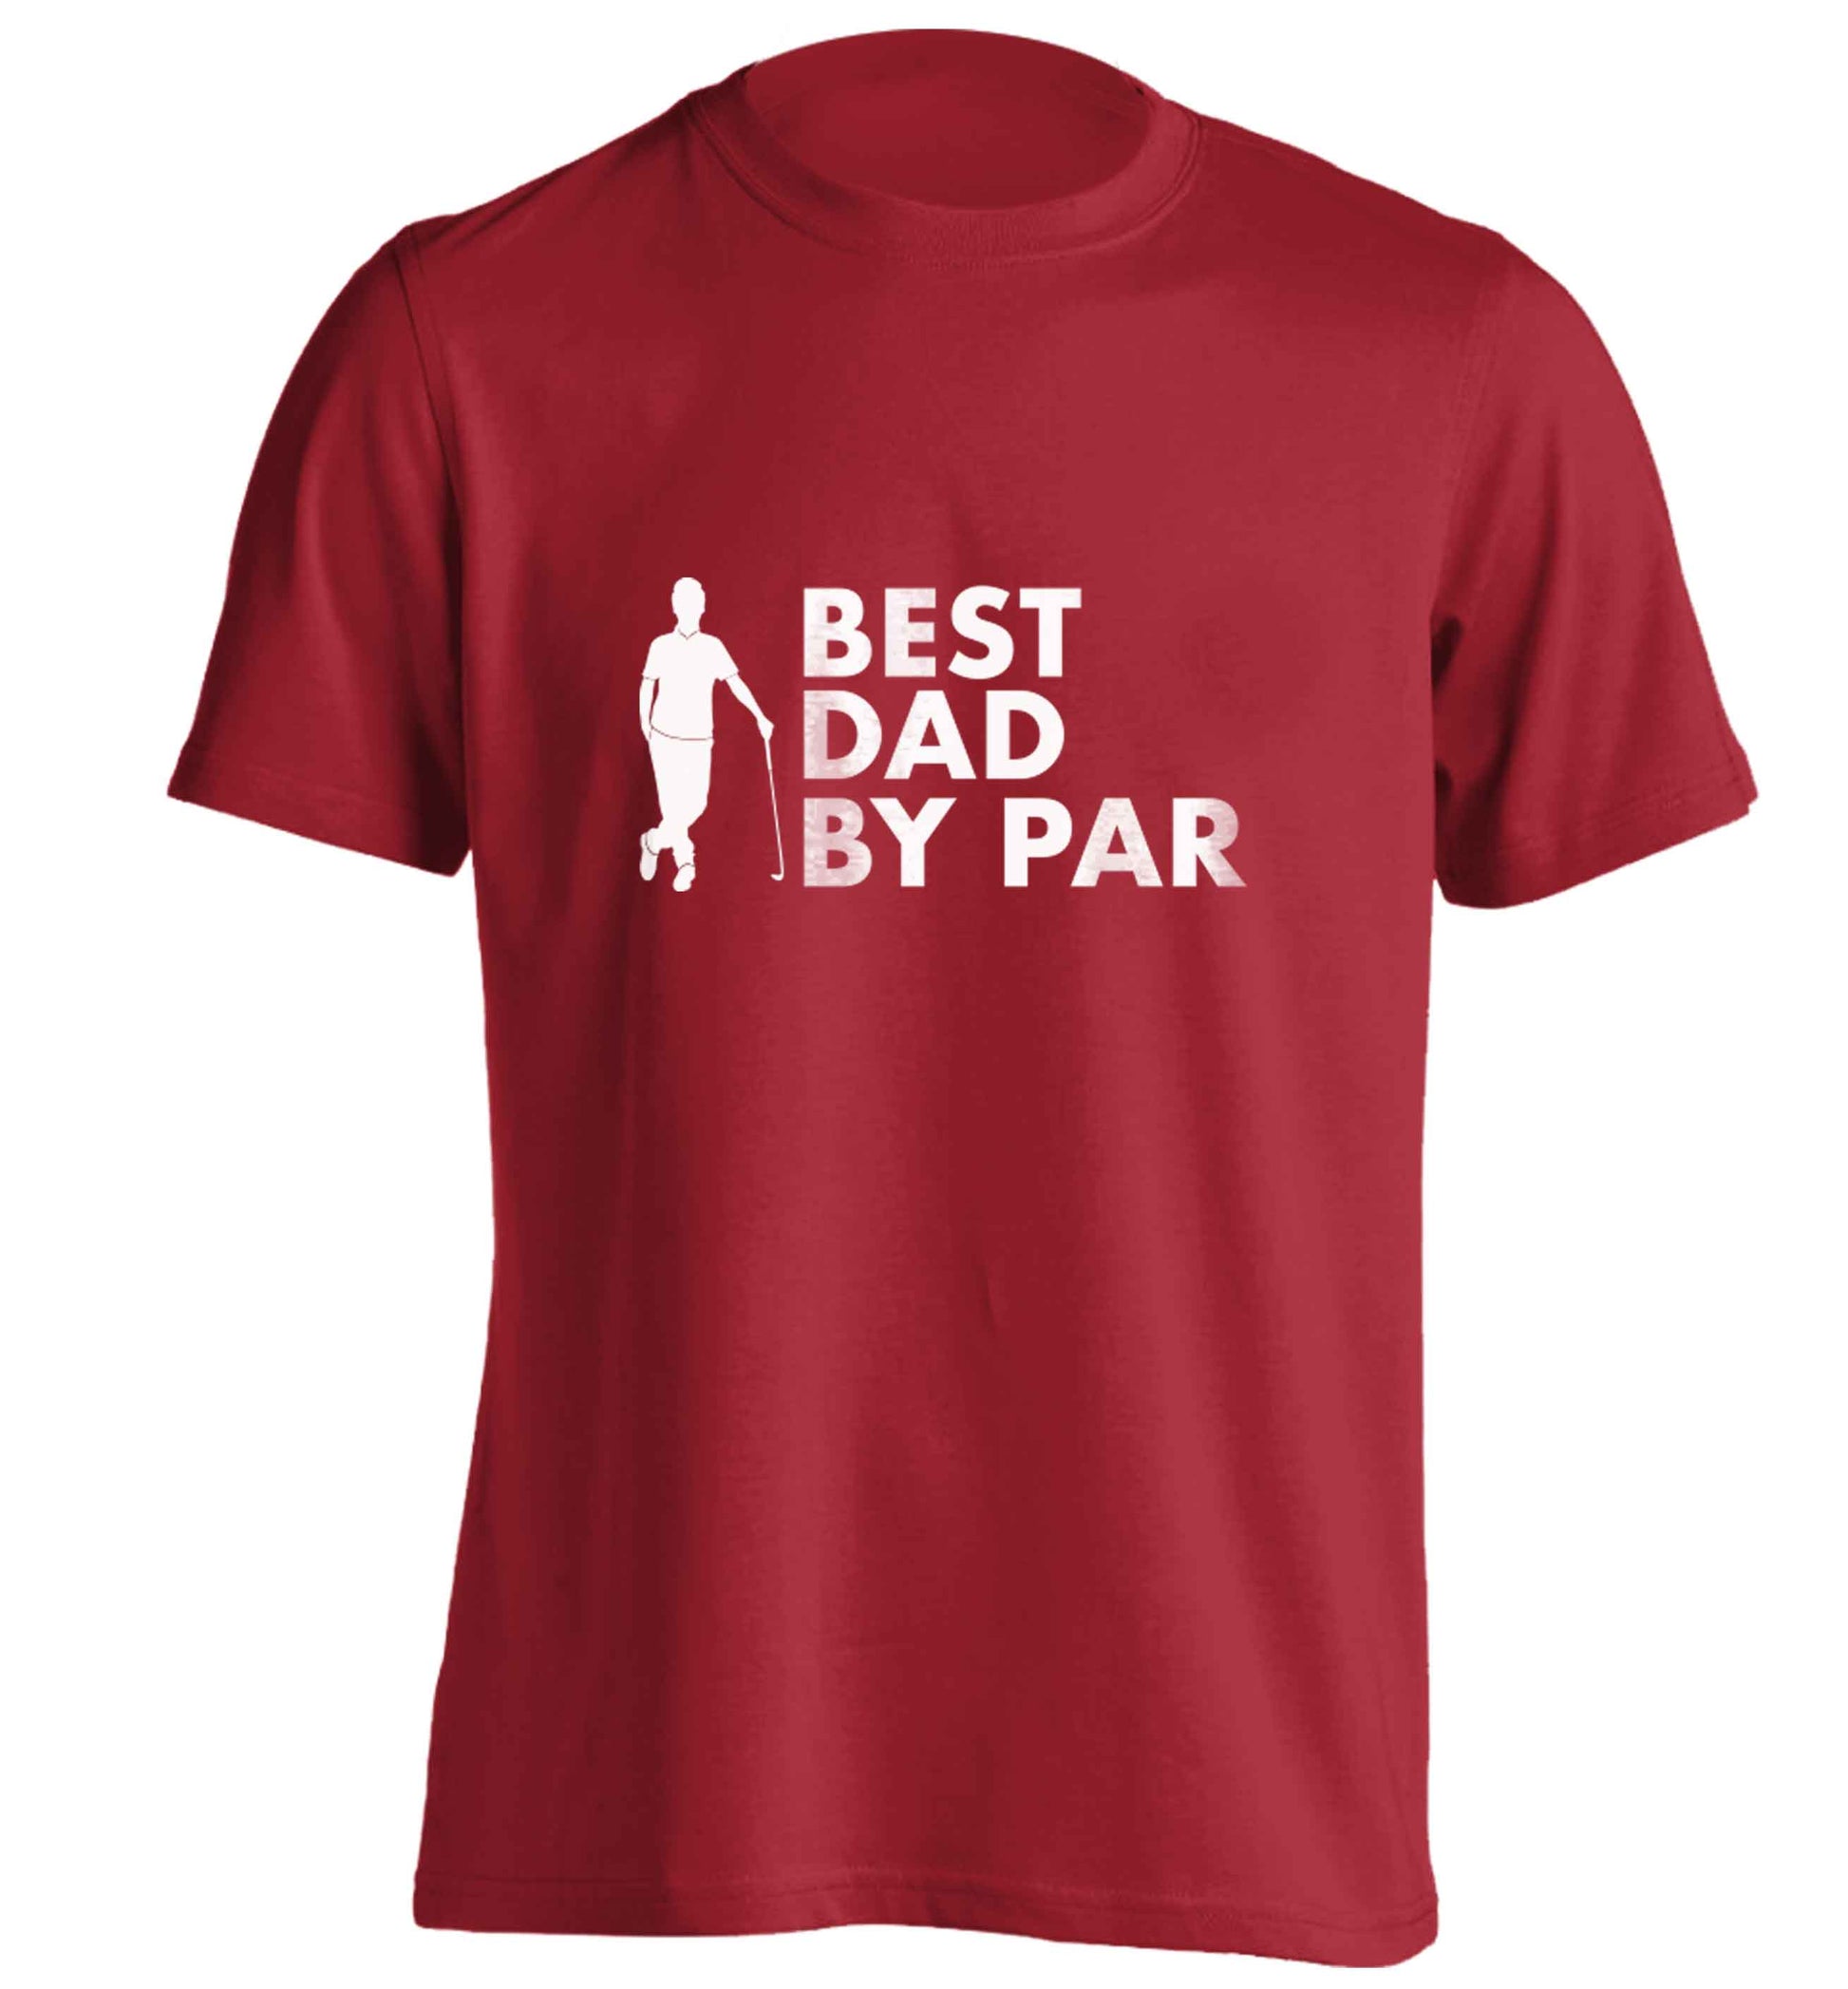 Best dad by par adults unisex red Tshirt 2XL